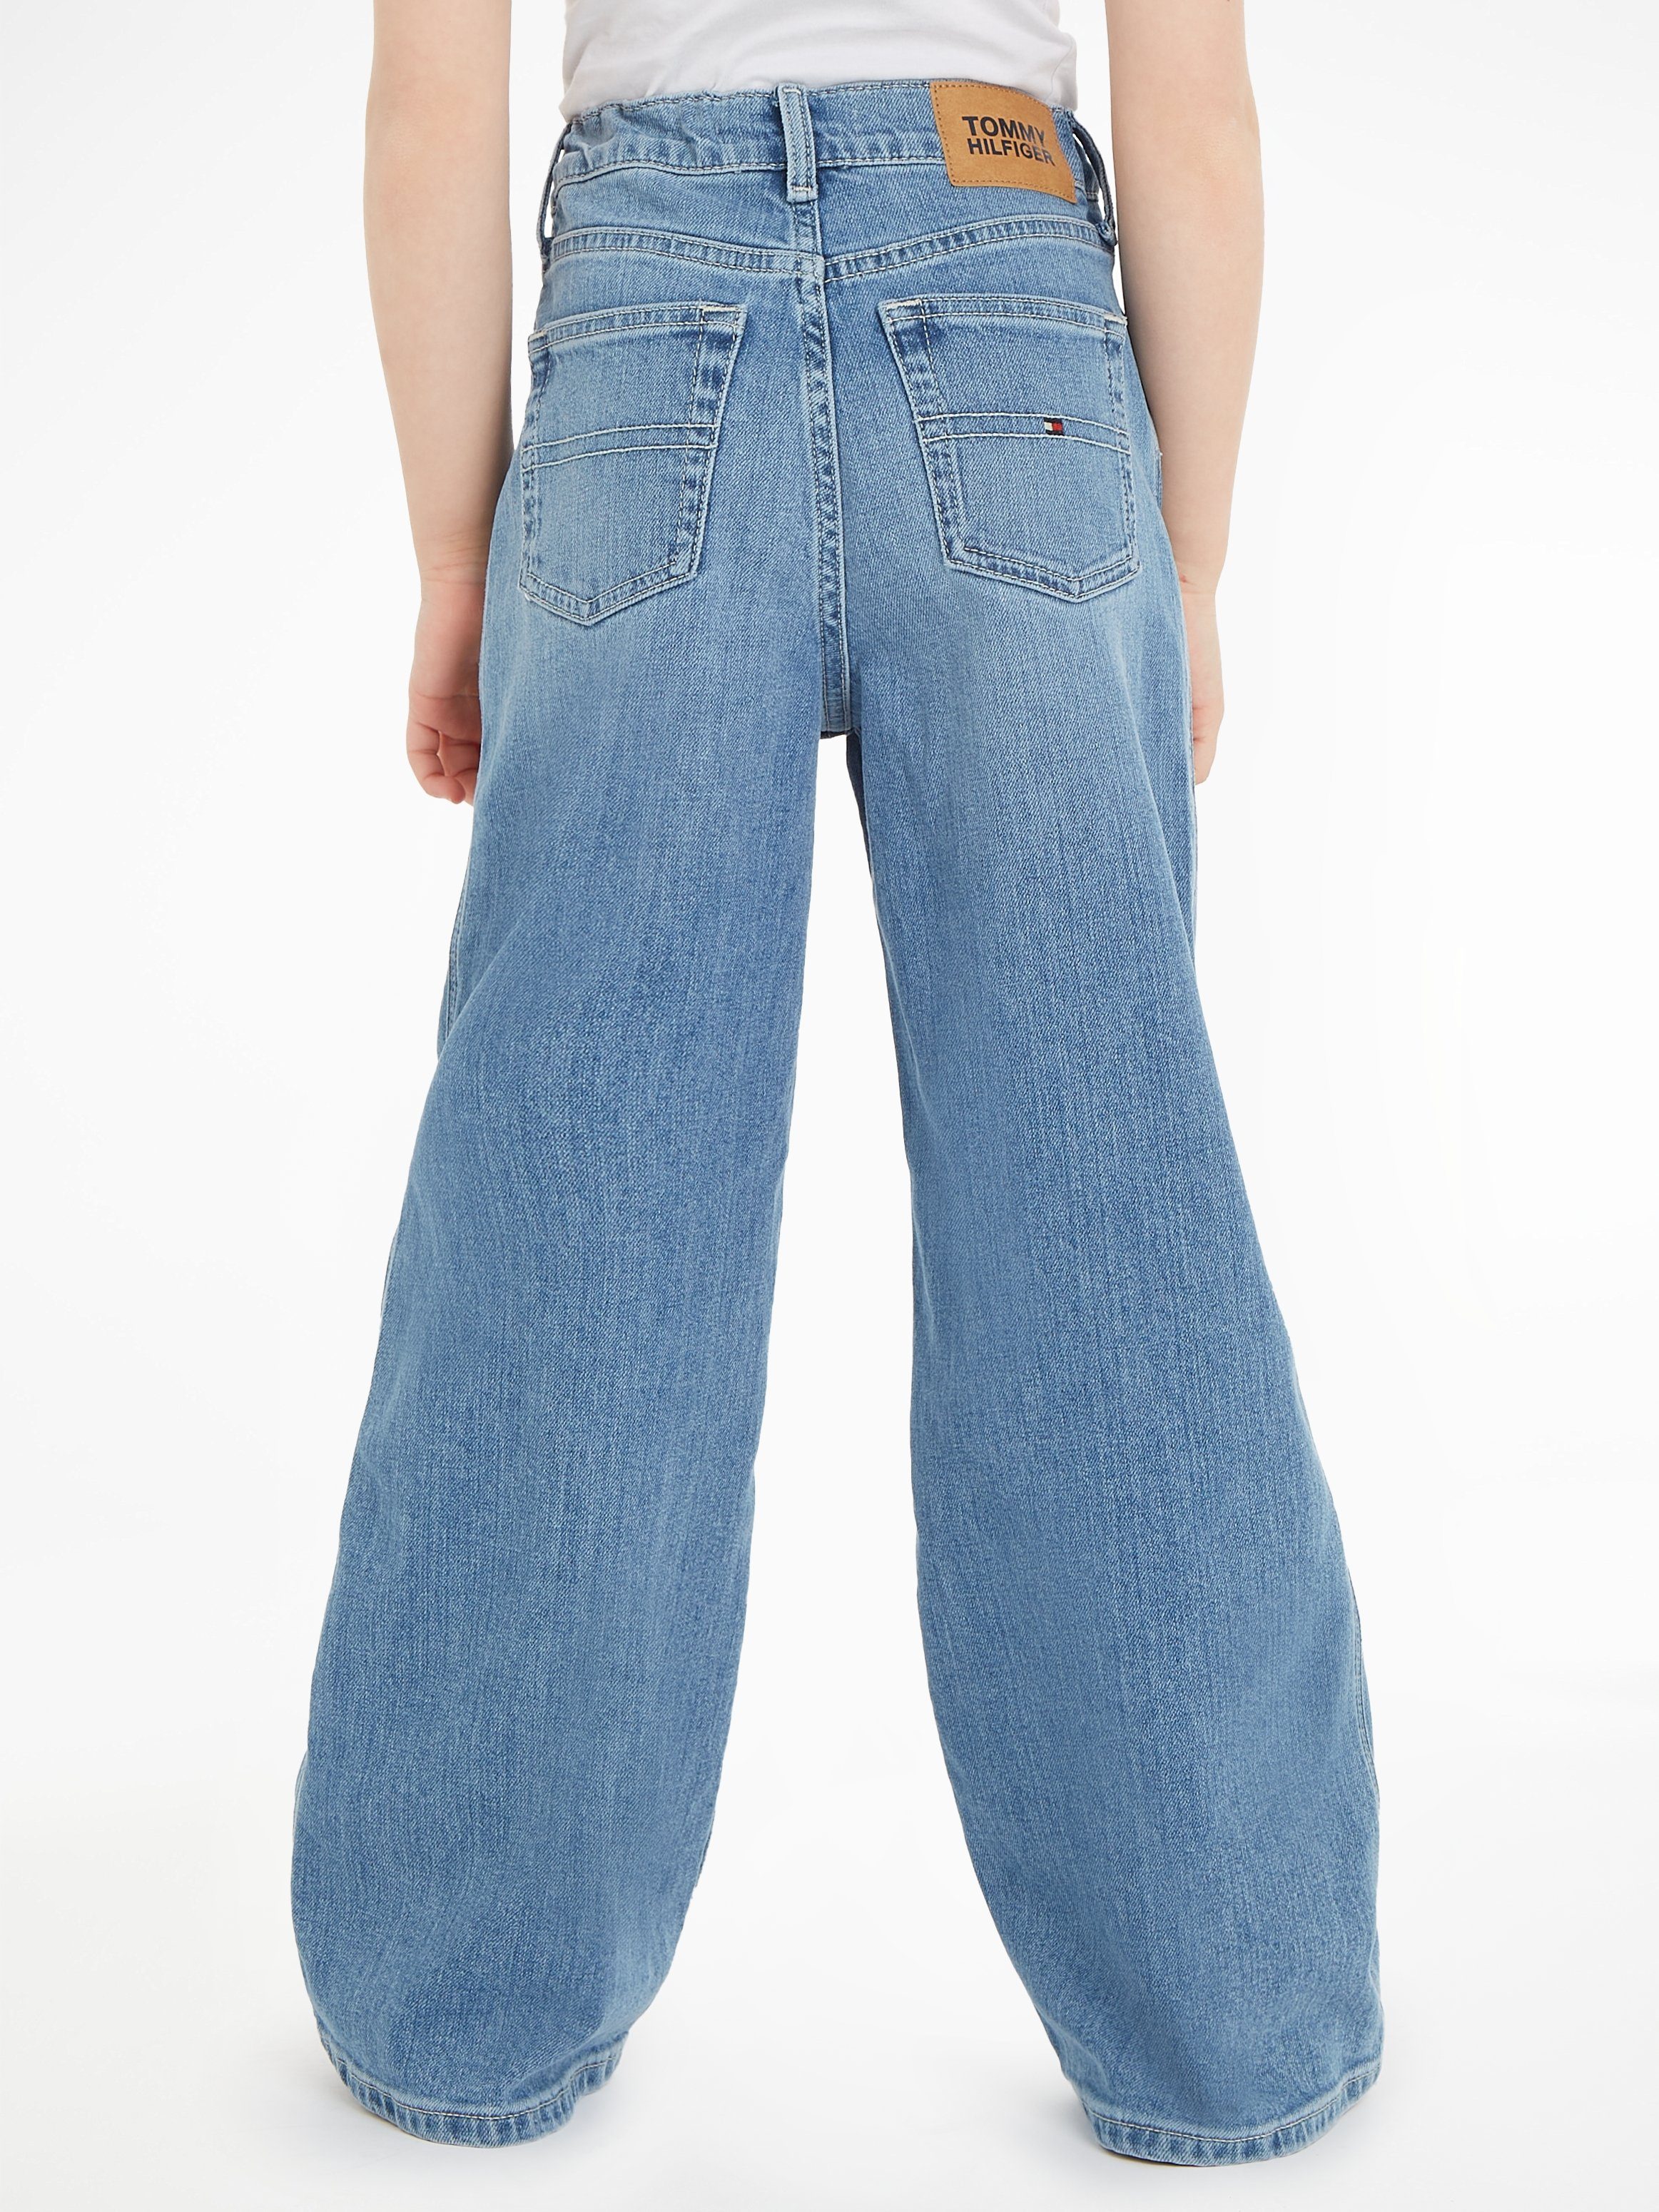 WASH Tommy MID MABEL Hilfiger Jeans im 5-Pocket-Style Weite